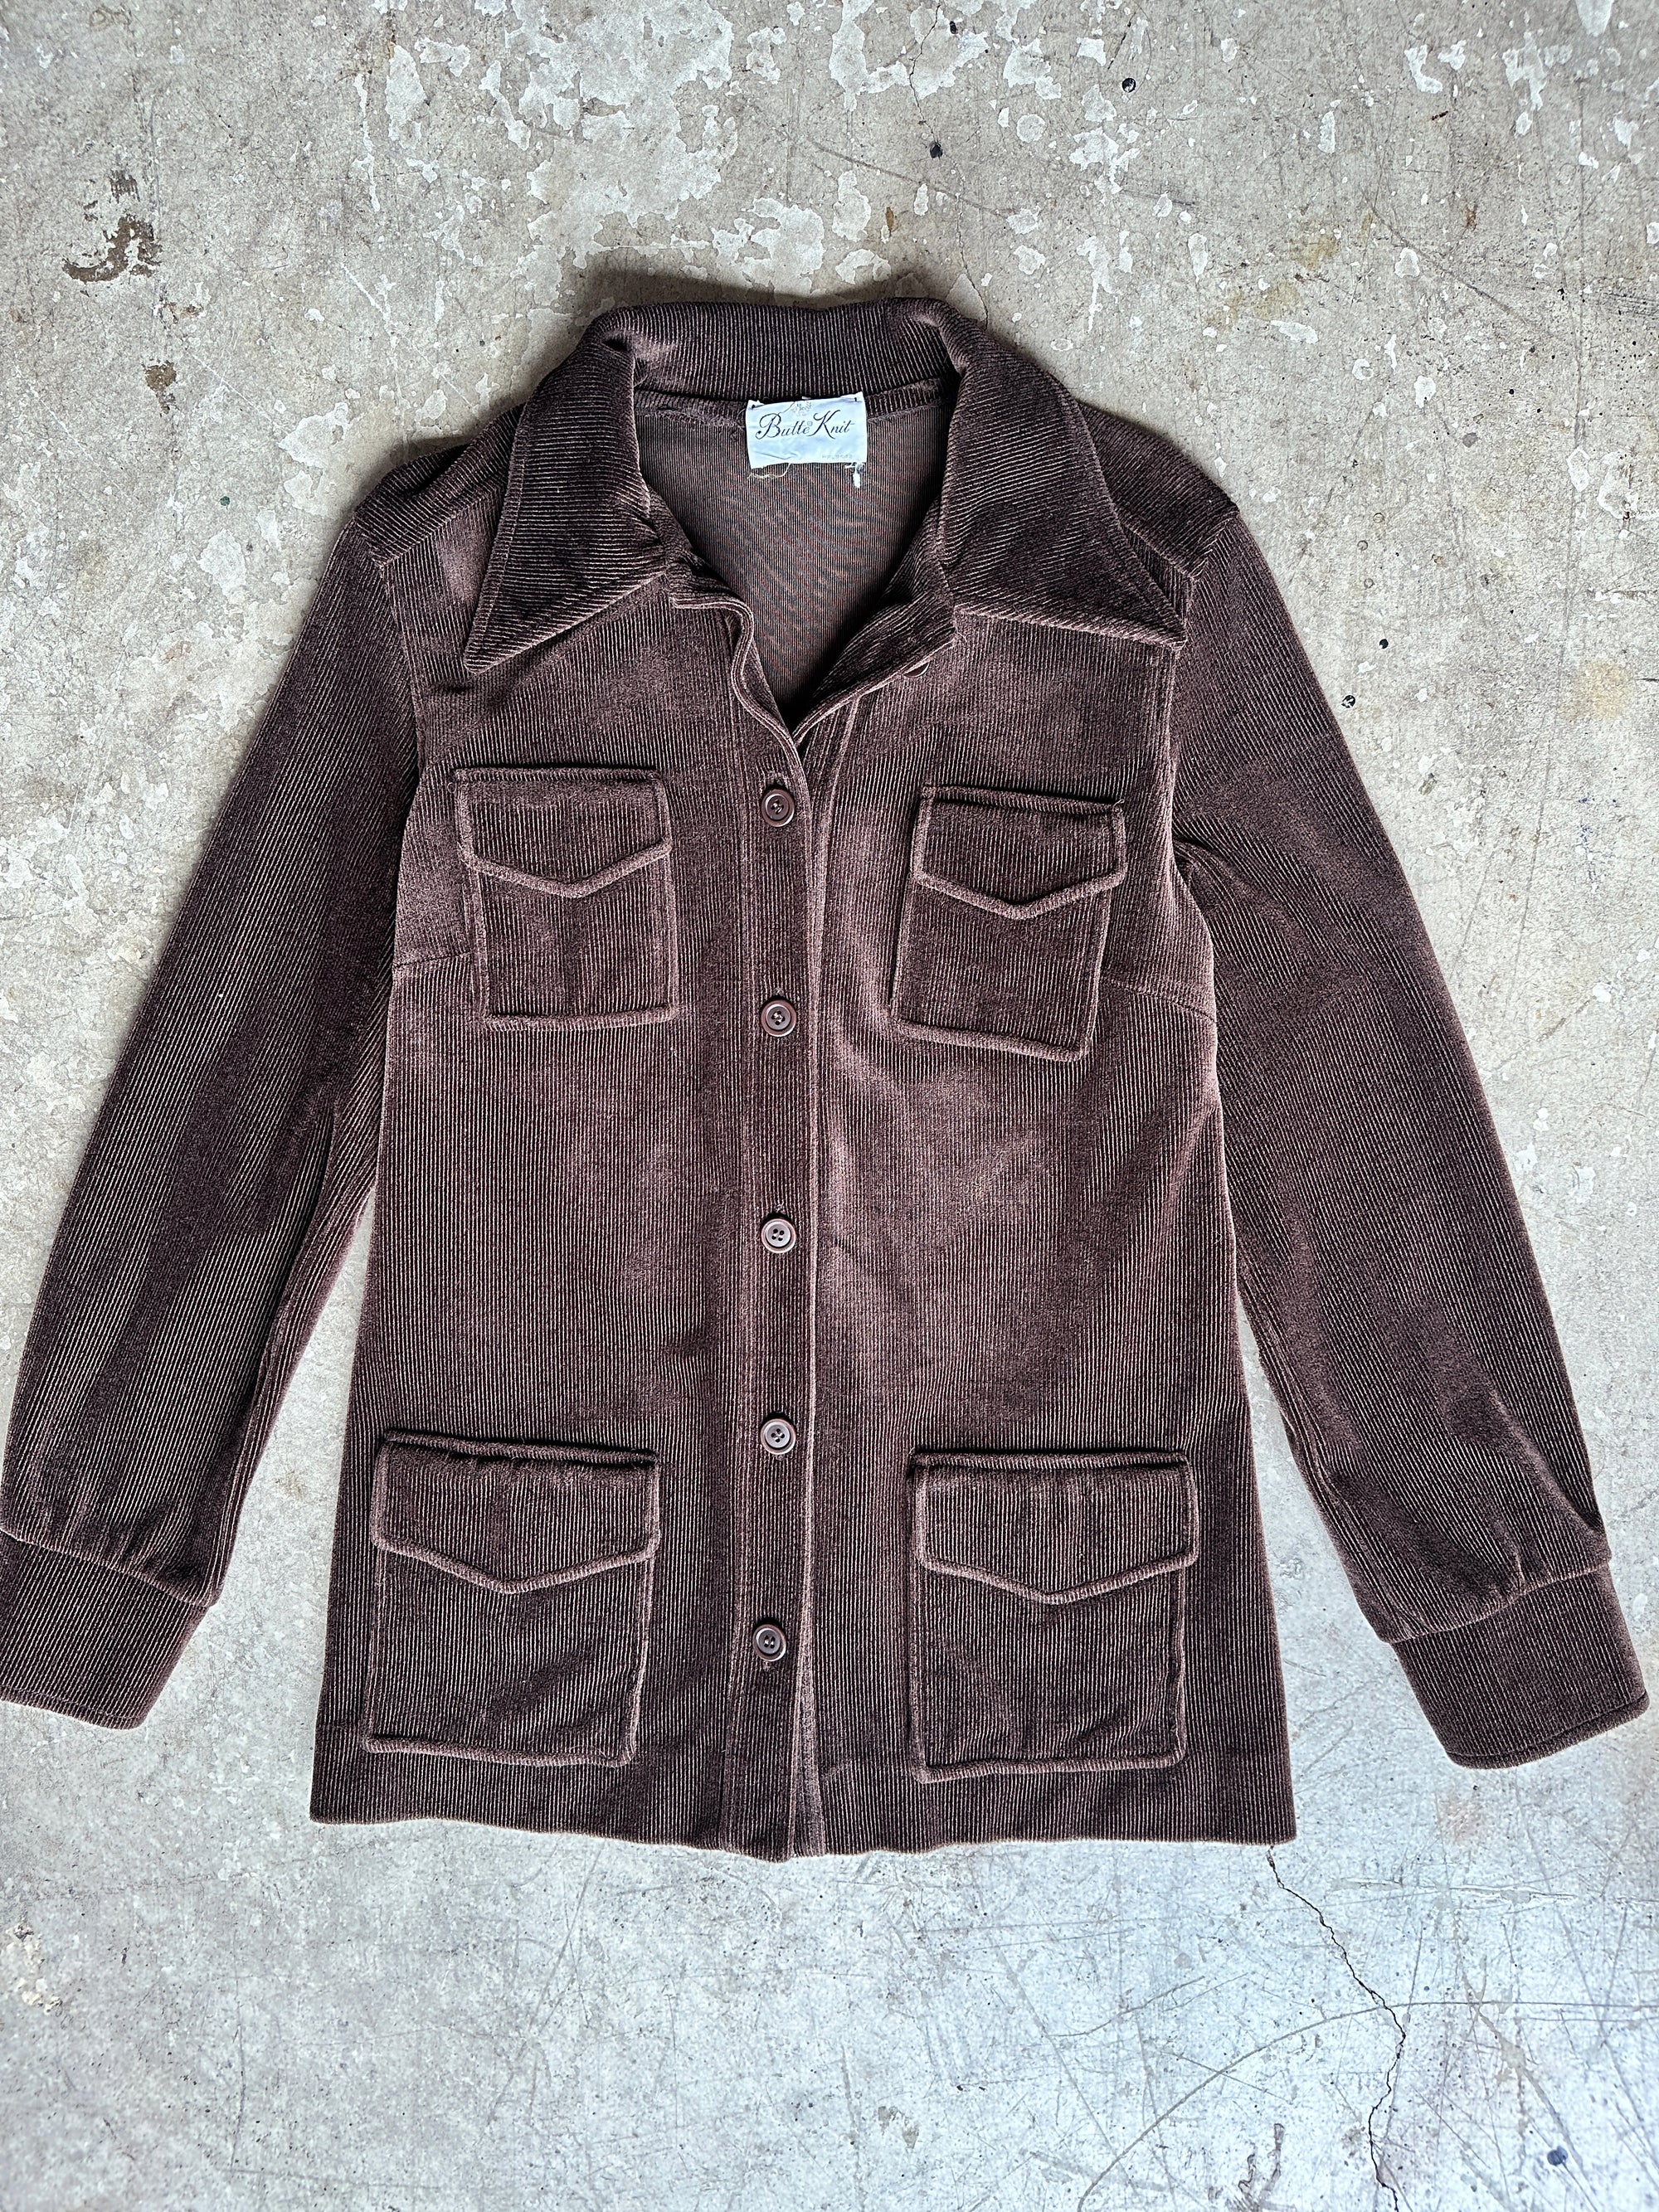 1970s Brown Corduroy Shirt Jacket